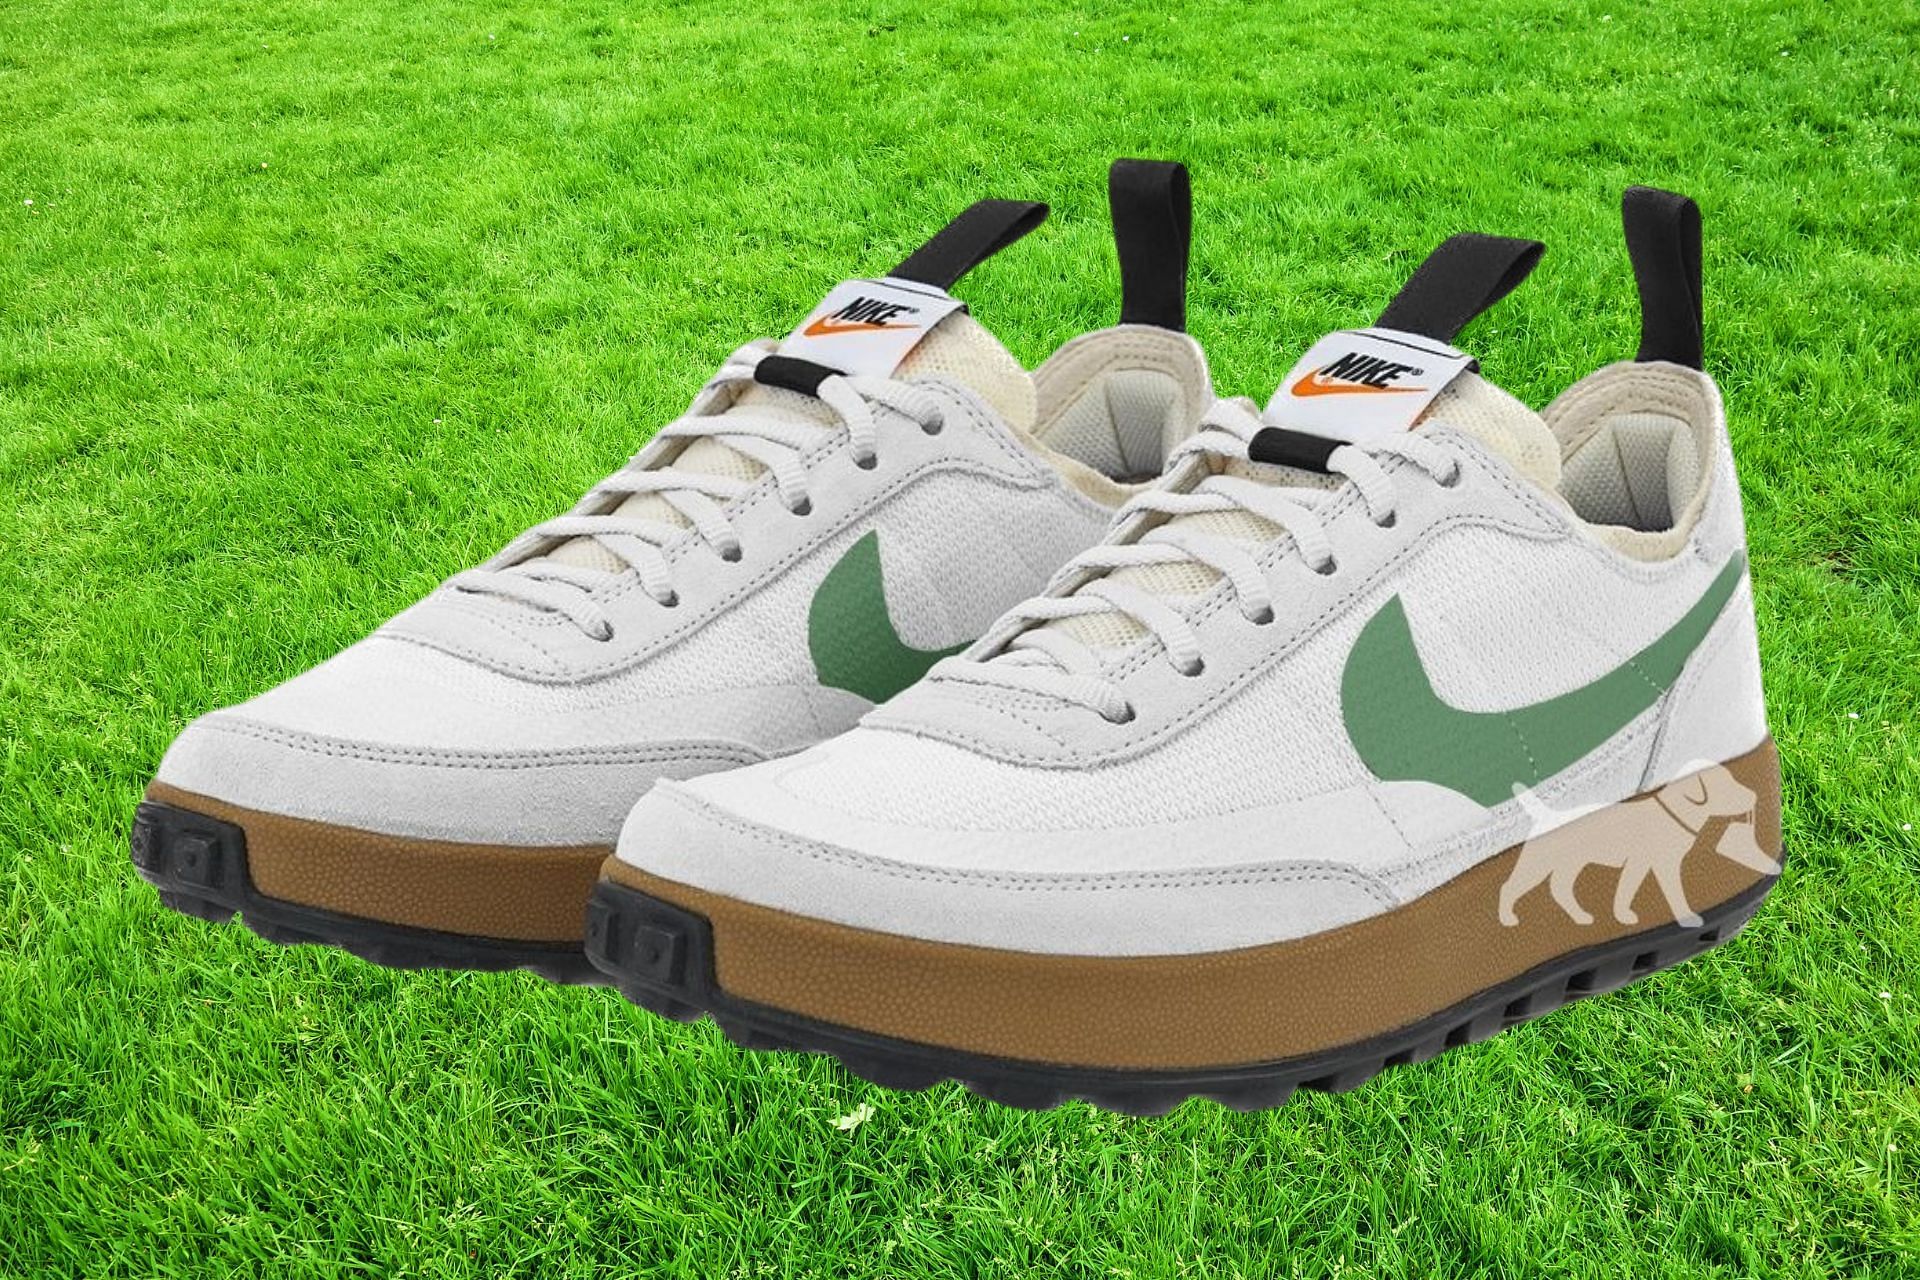 Tom Sachs x NikeCraft General Purpose Shoe White Gorge Green colorway (Image via Sole Retriever)